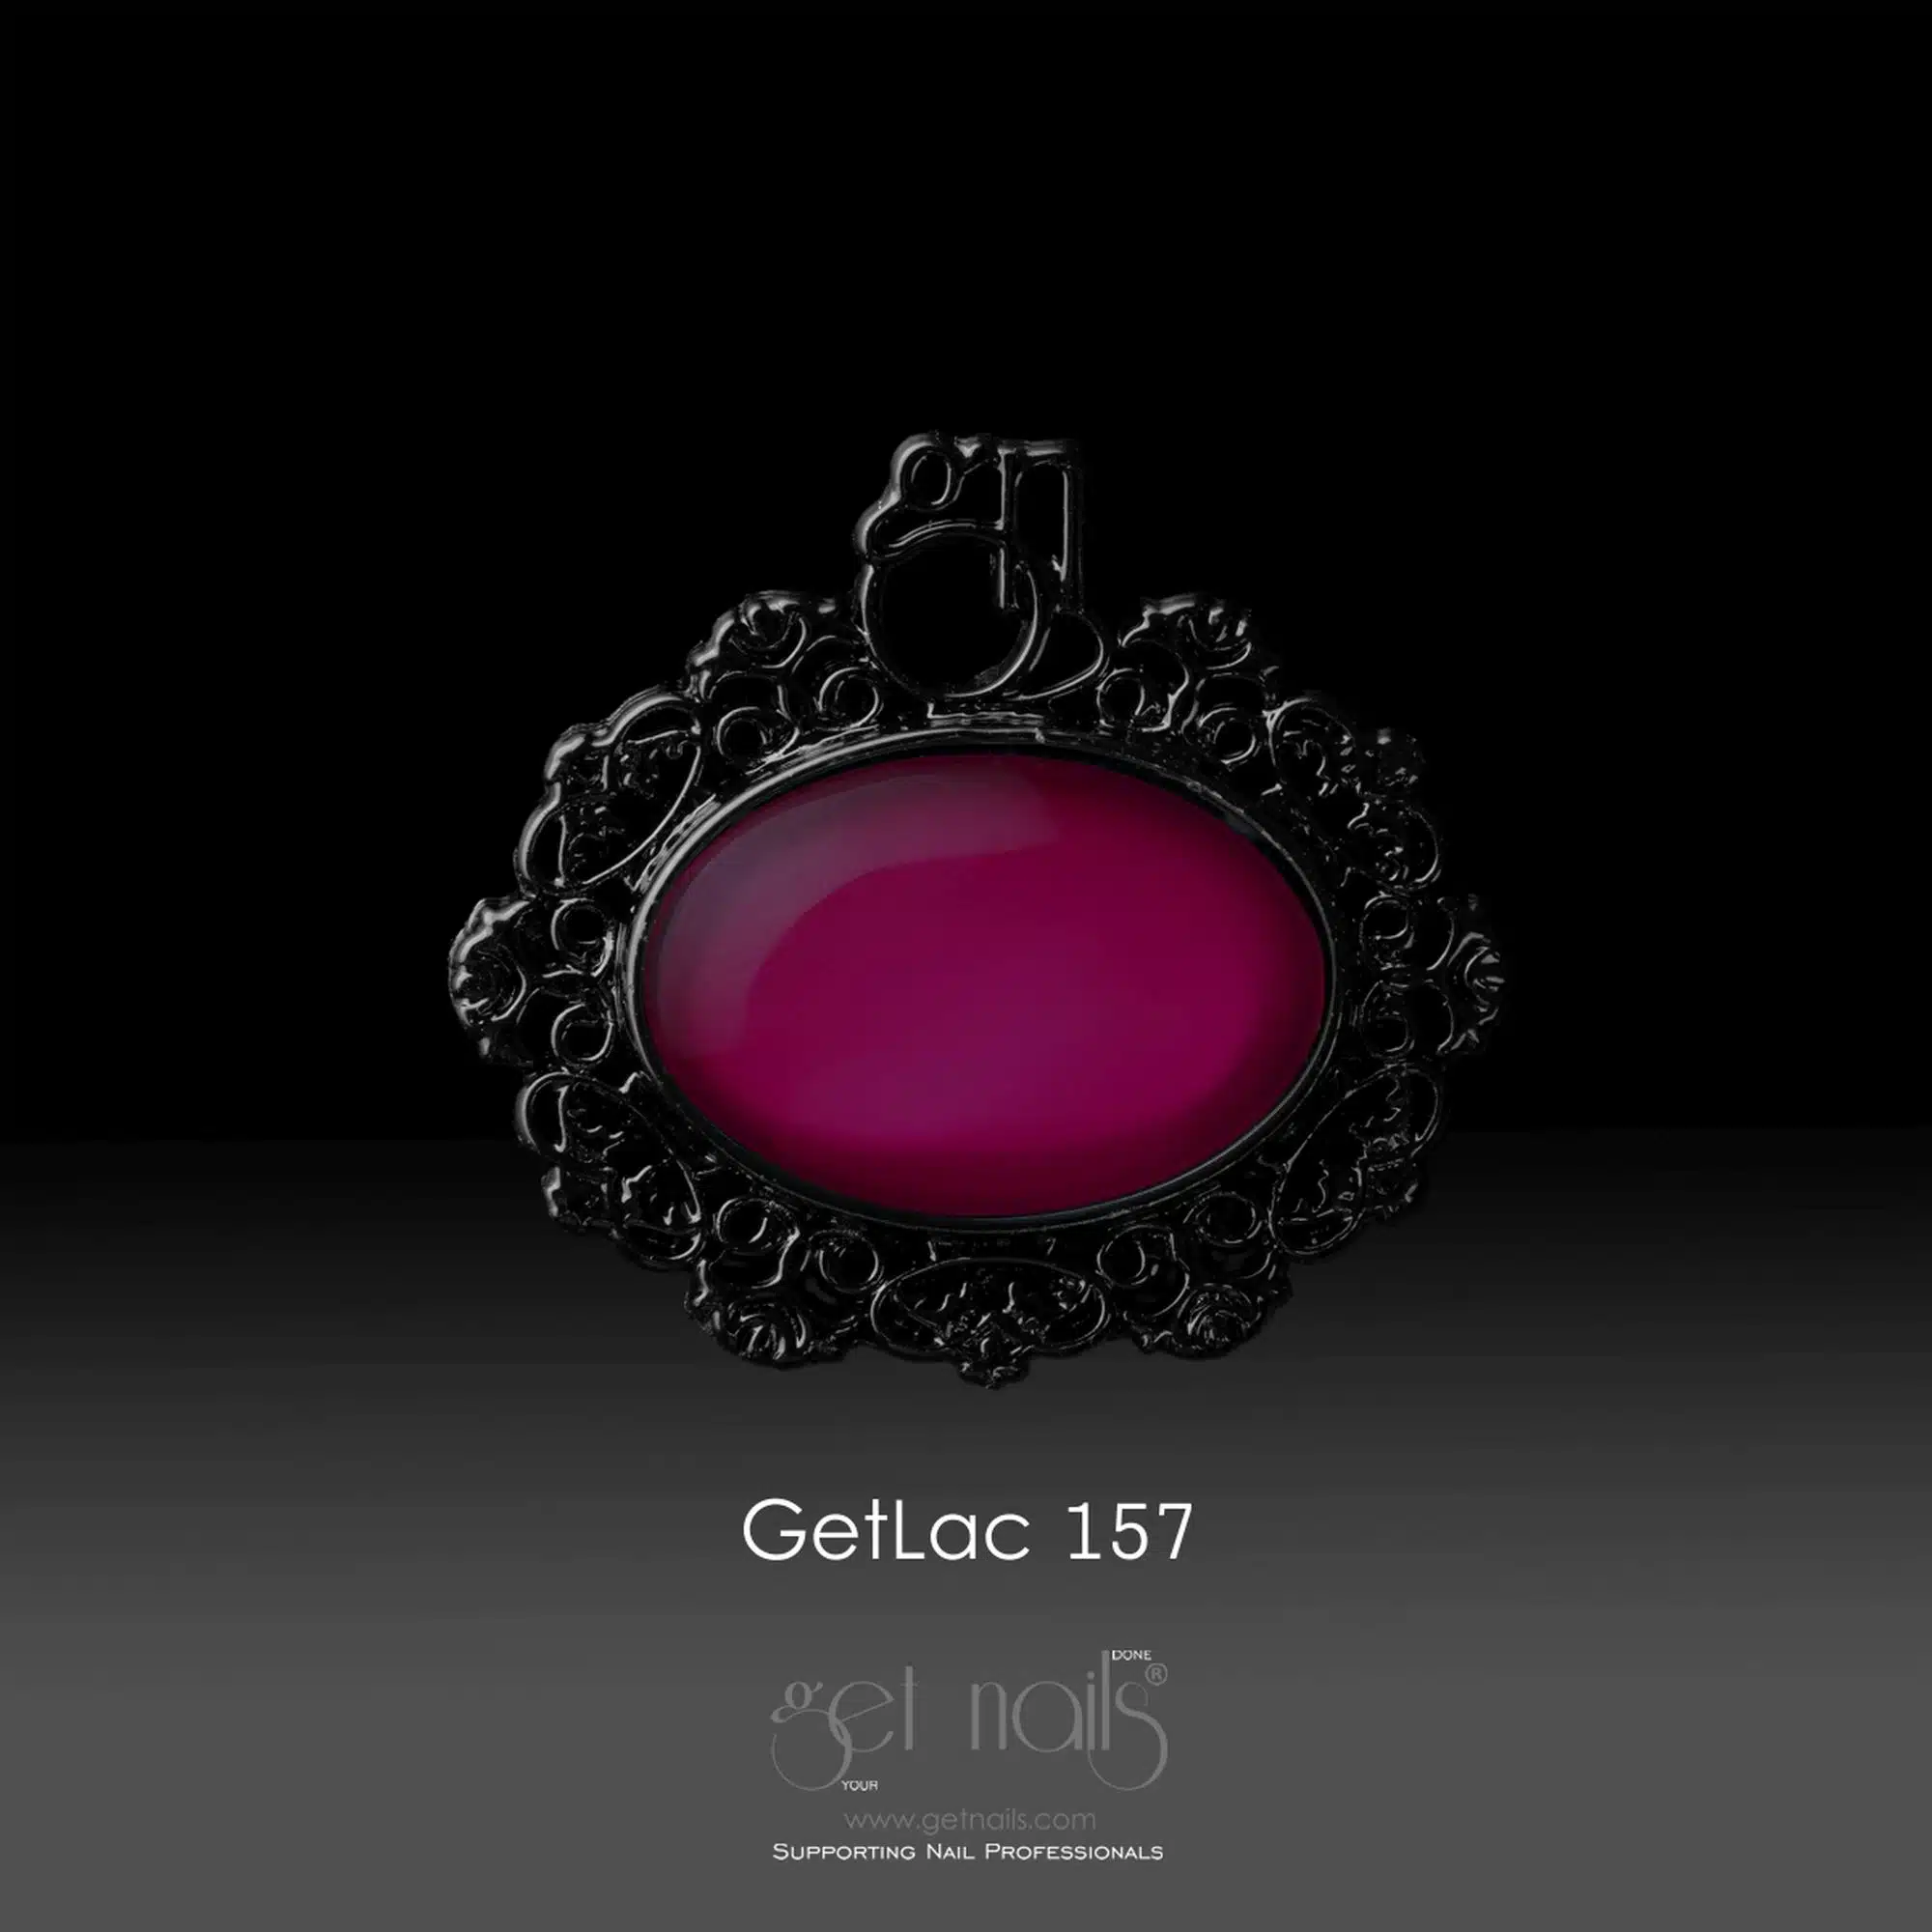 Ottieni Nails Austria - GetLac 157 15g